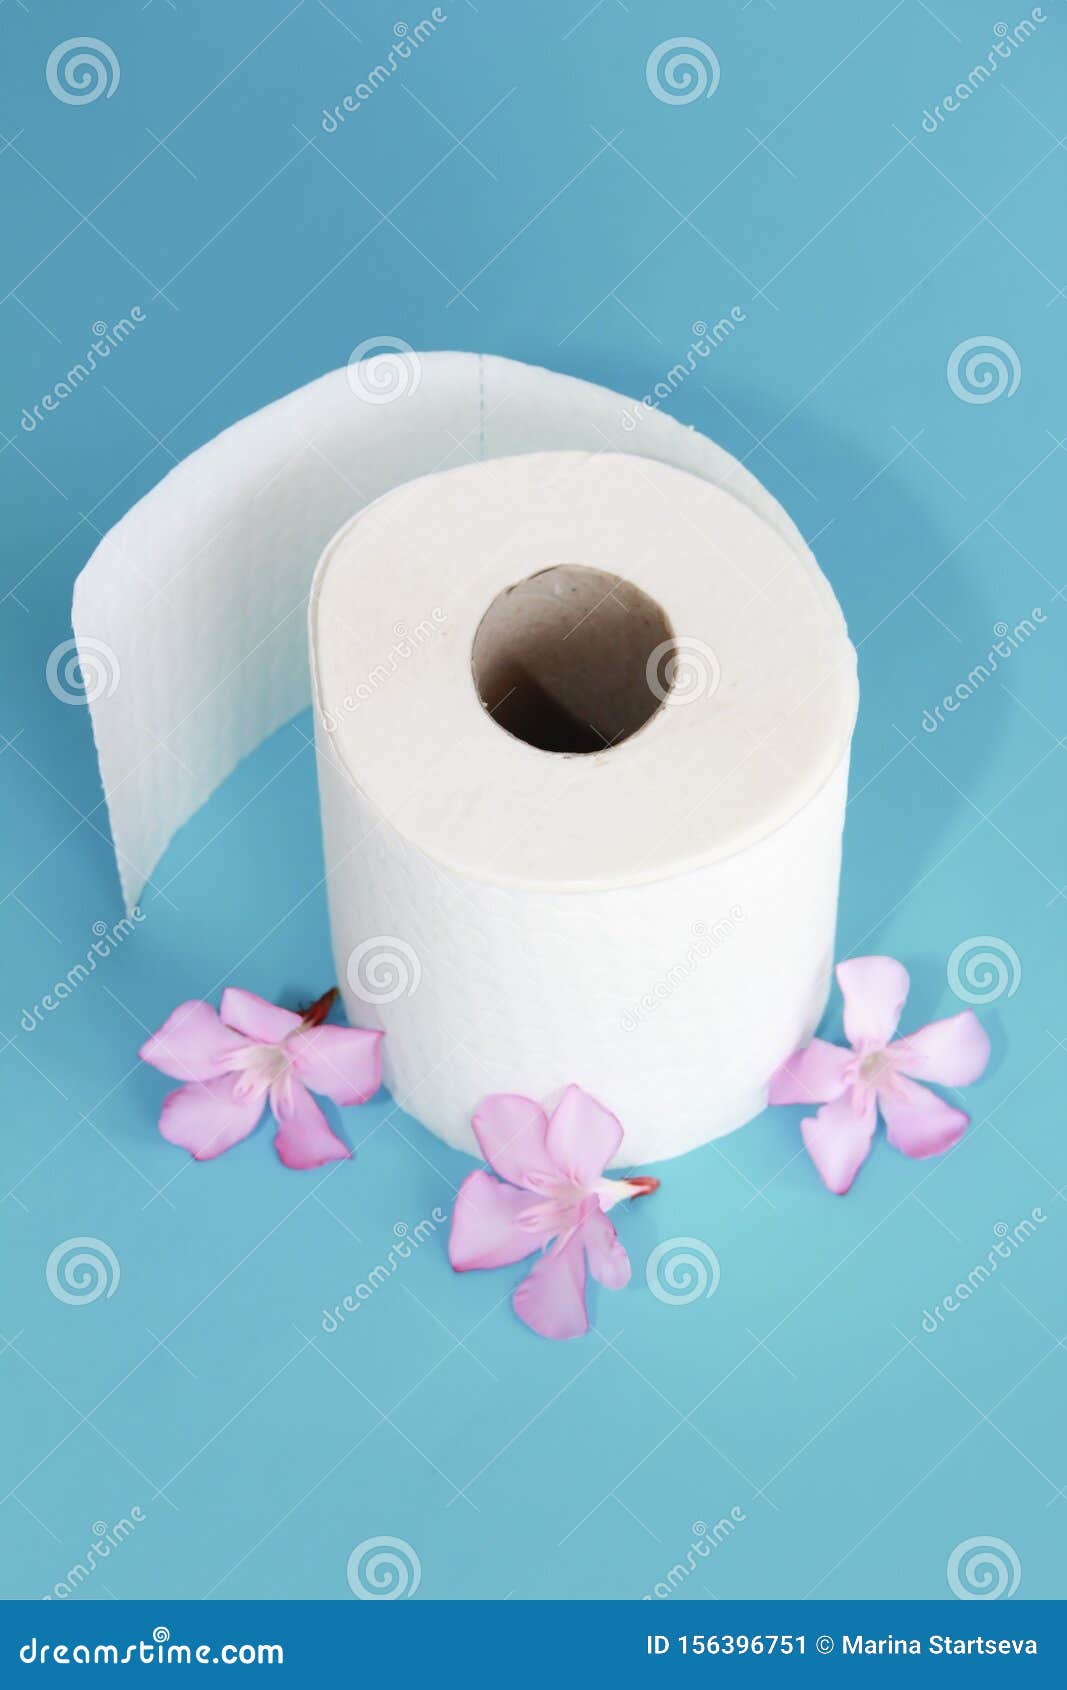 Toilet paper roll flowers